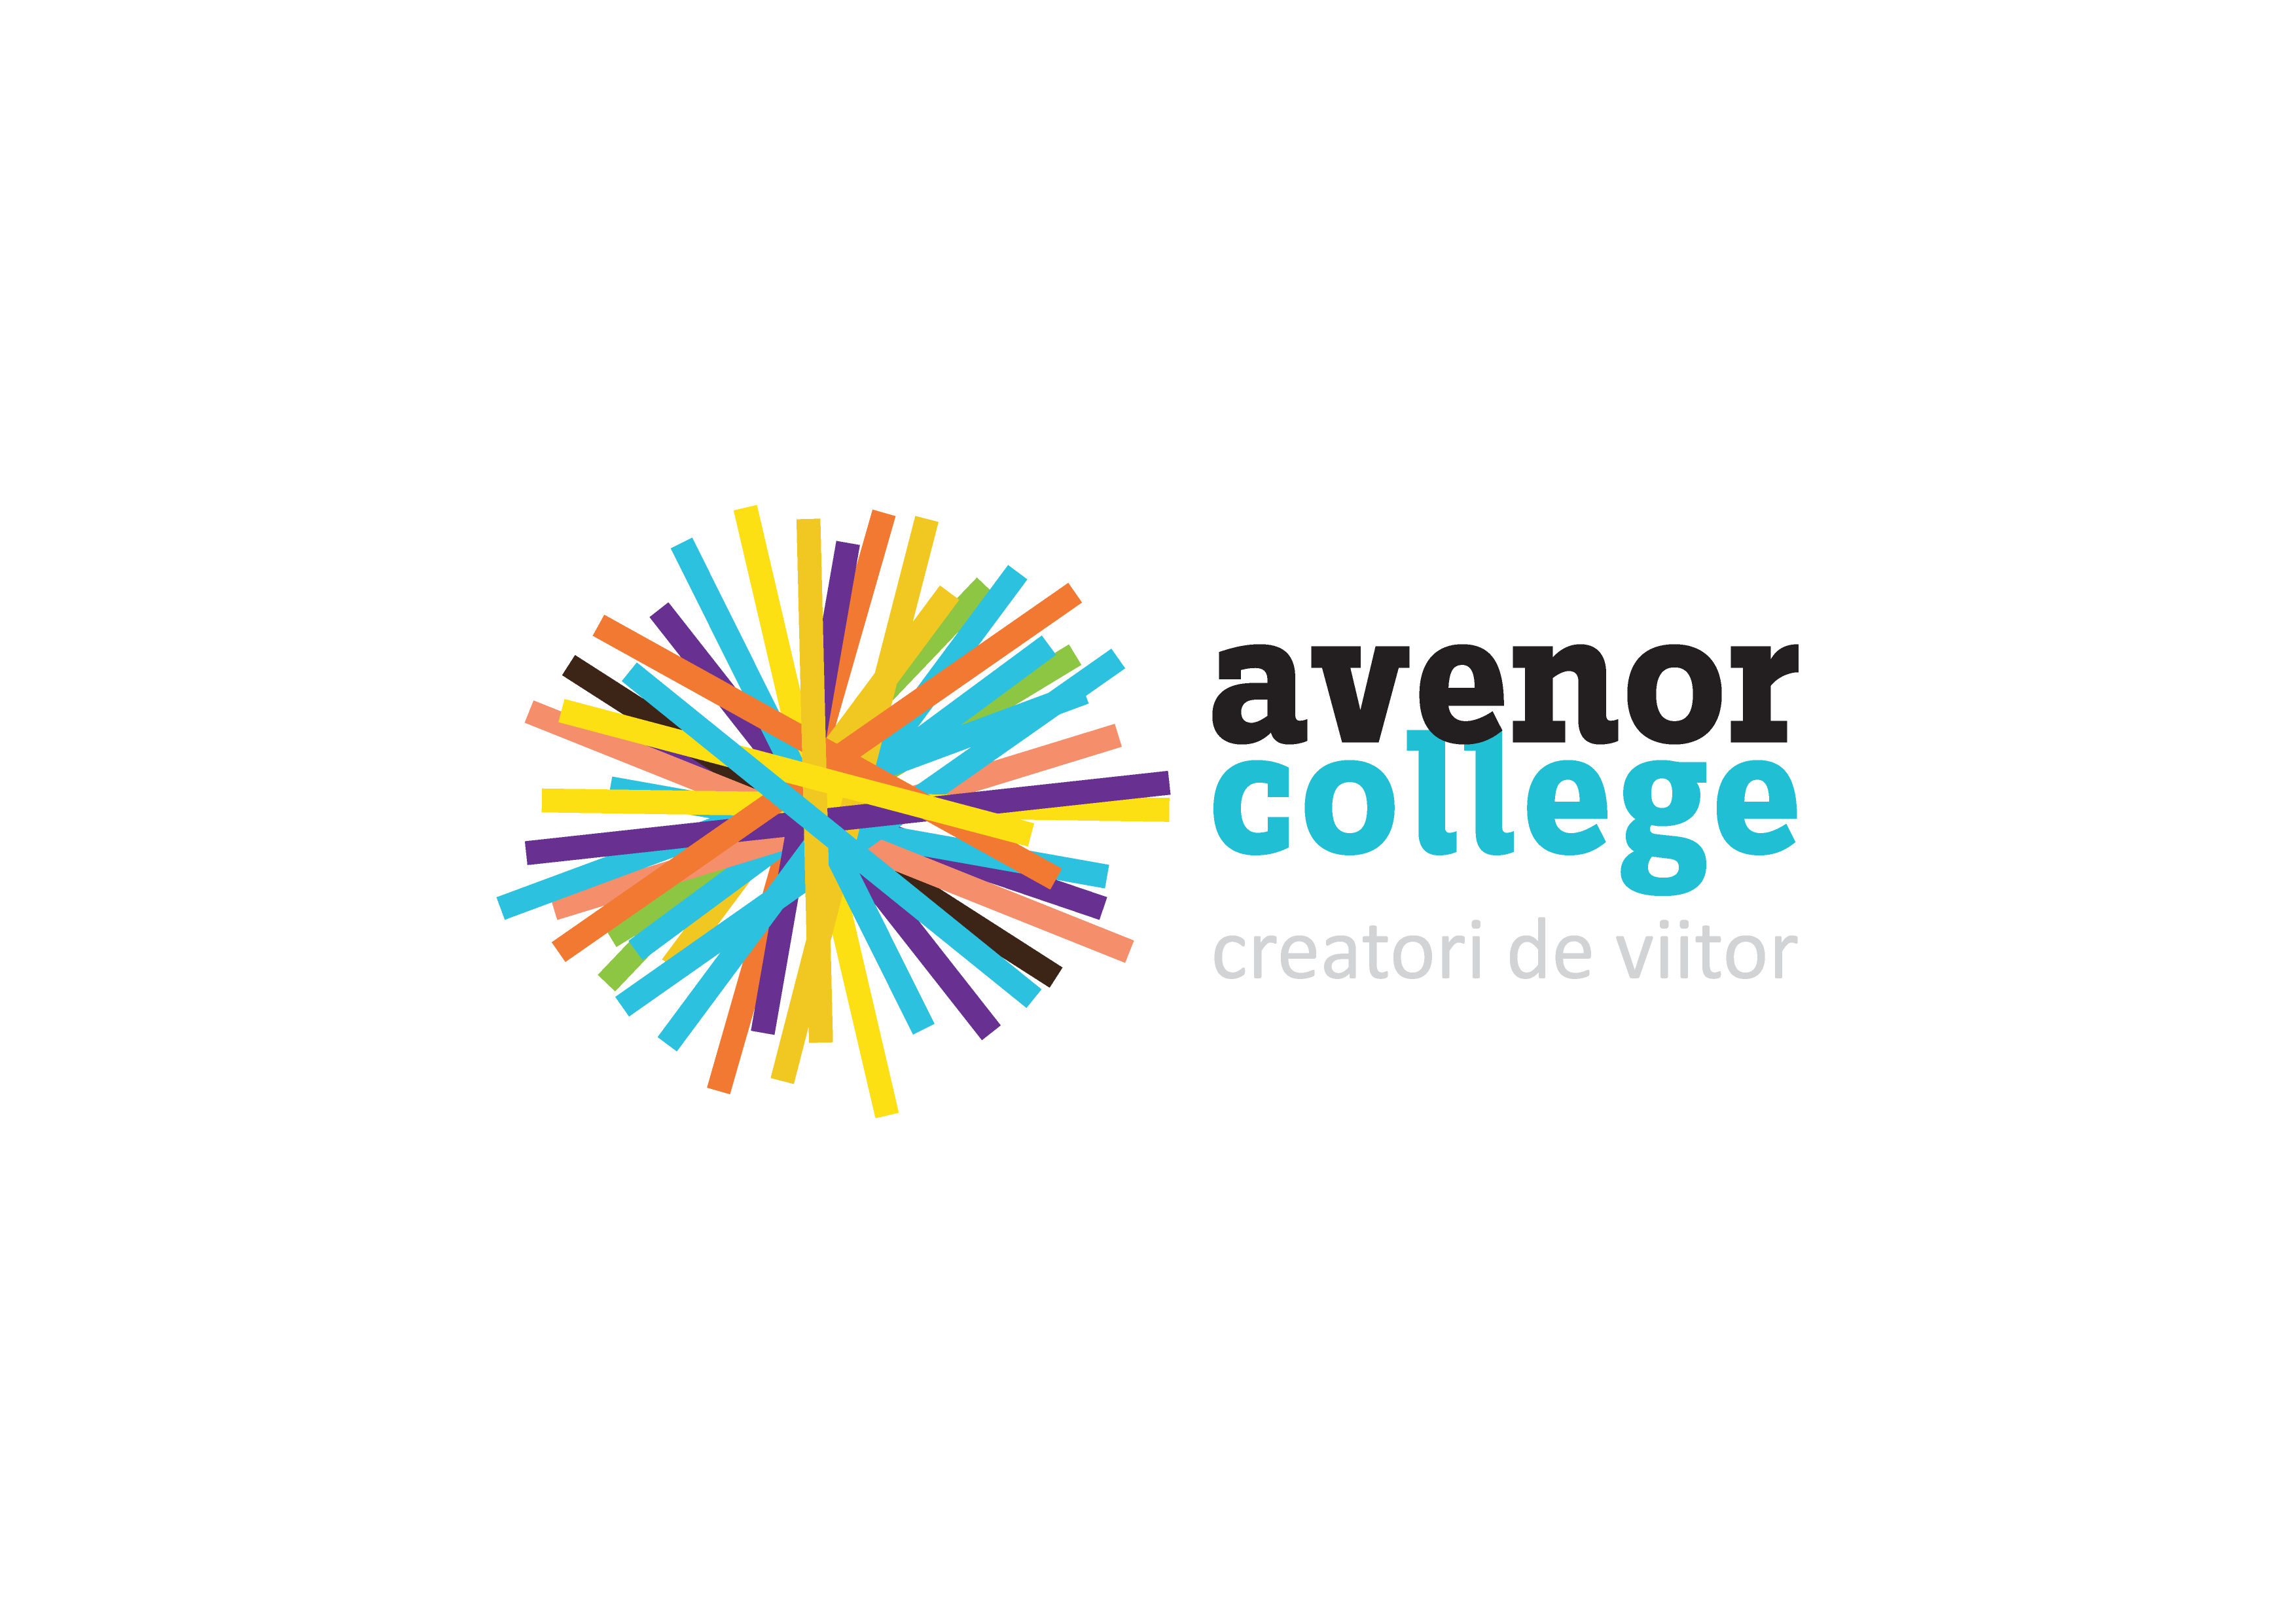 Avenor College Logo